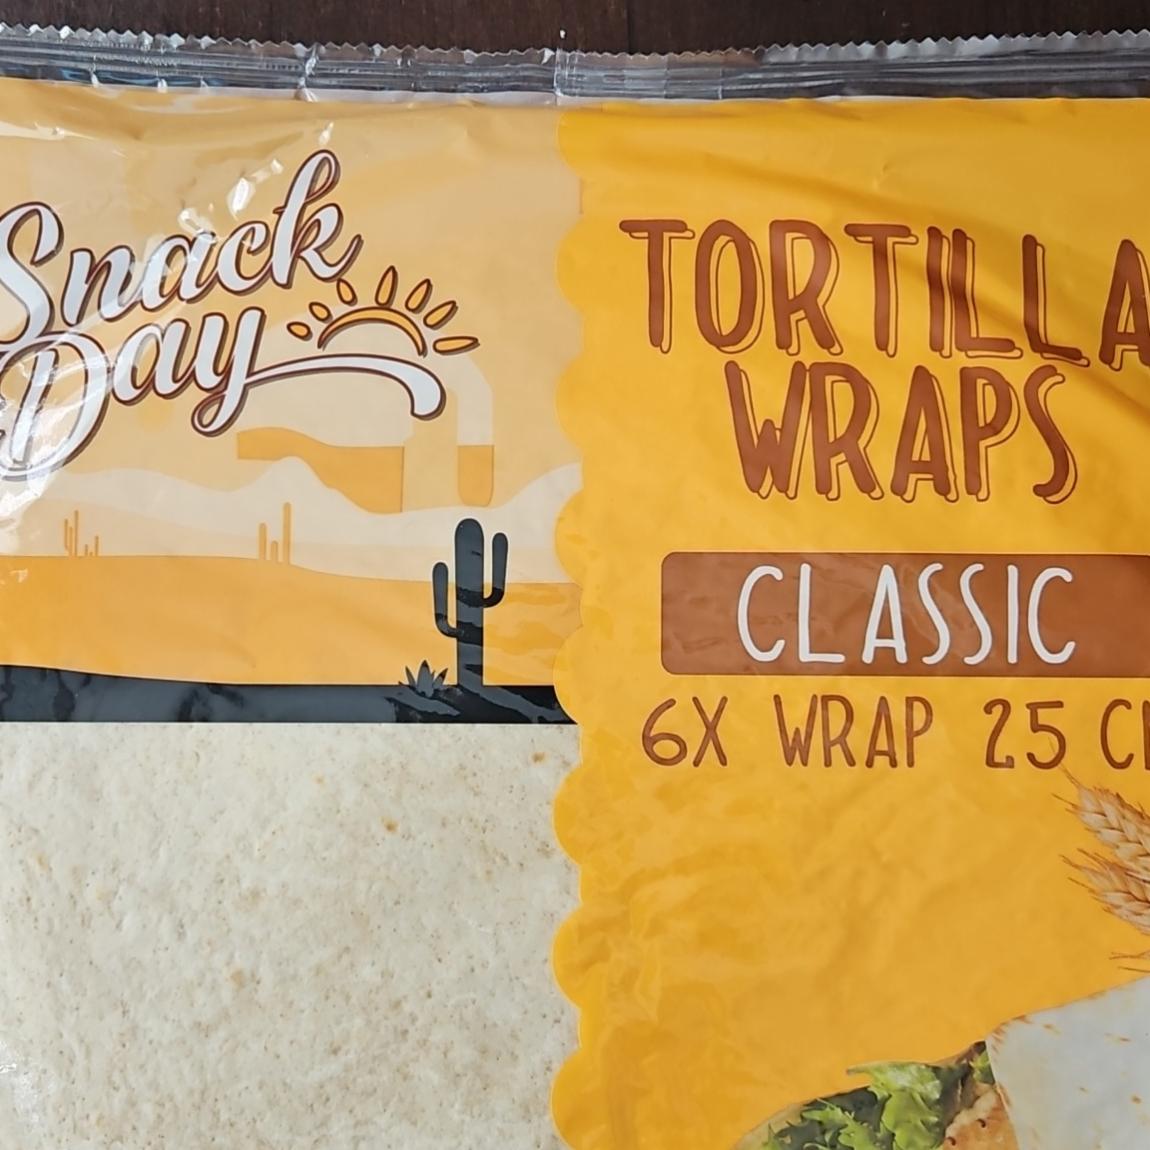 Fotografie - Tortilla Wraps Classic Snack Day